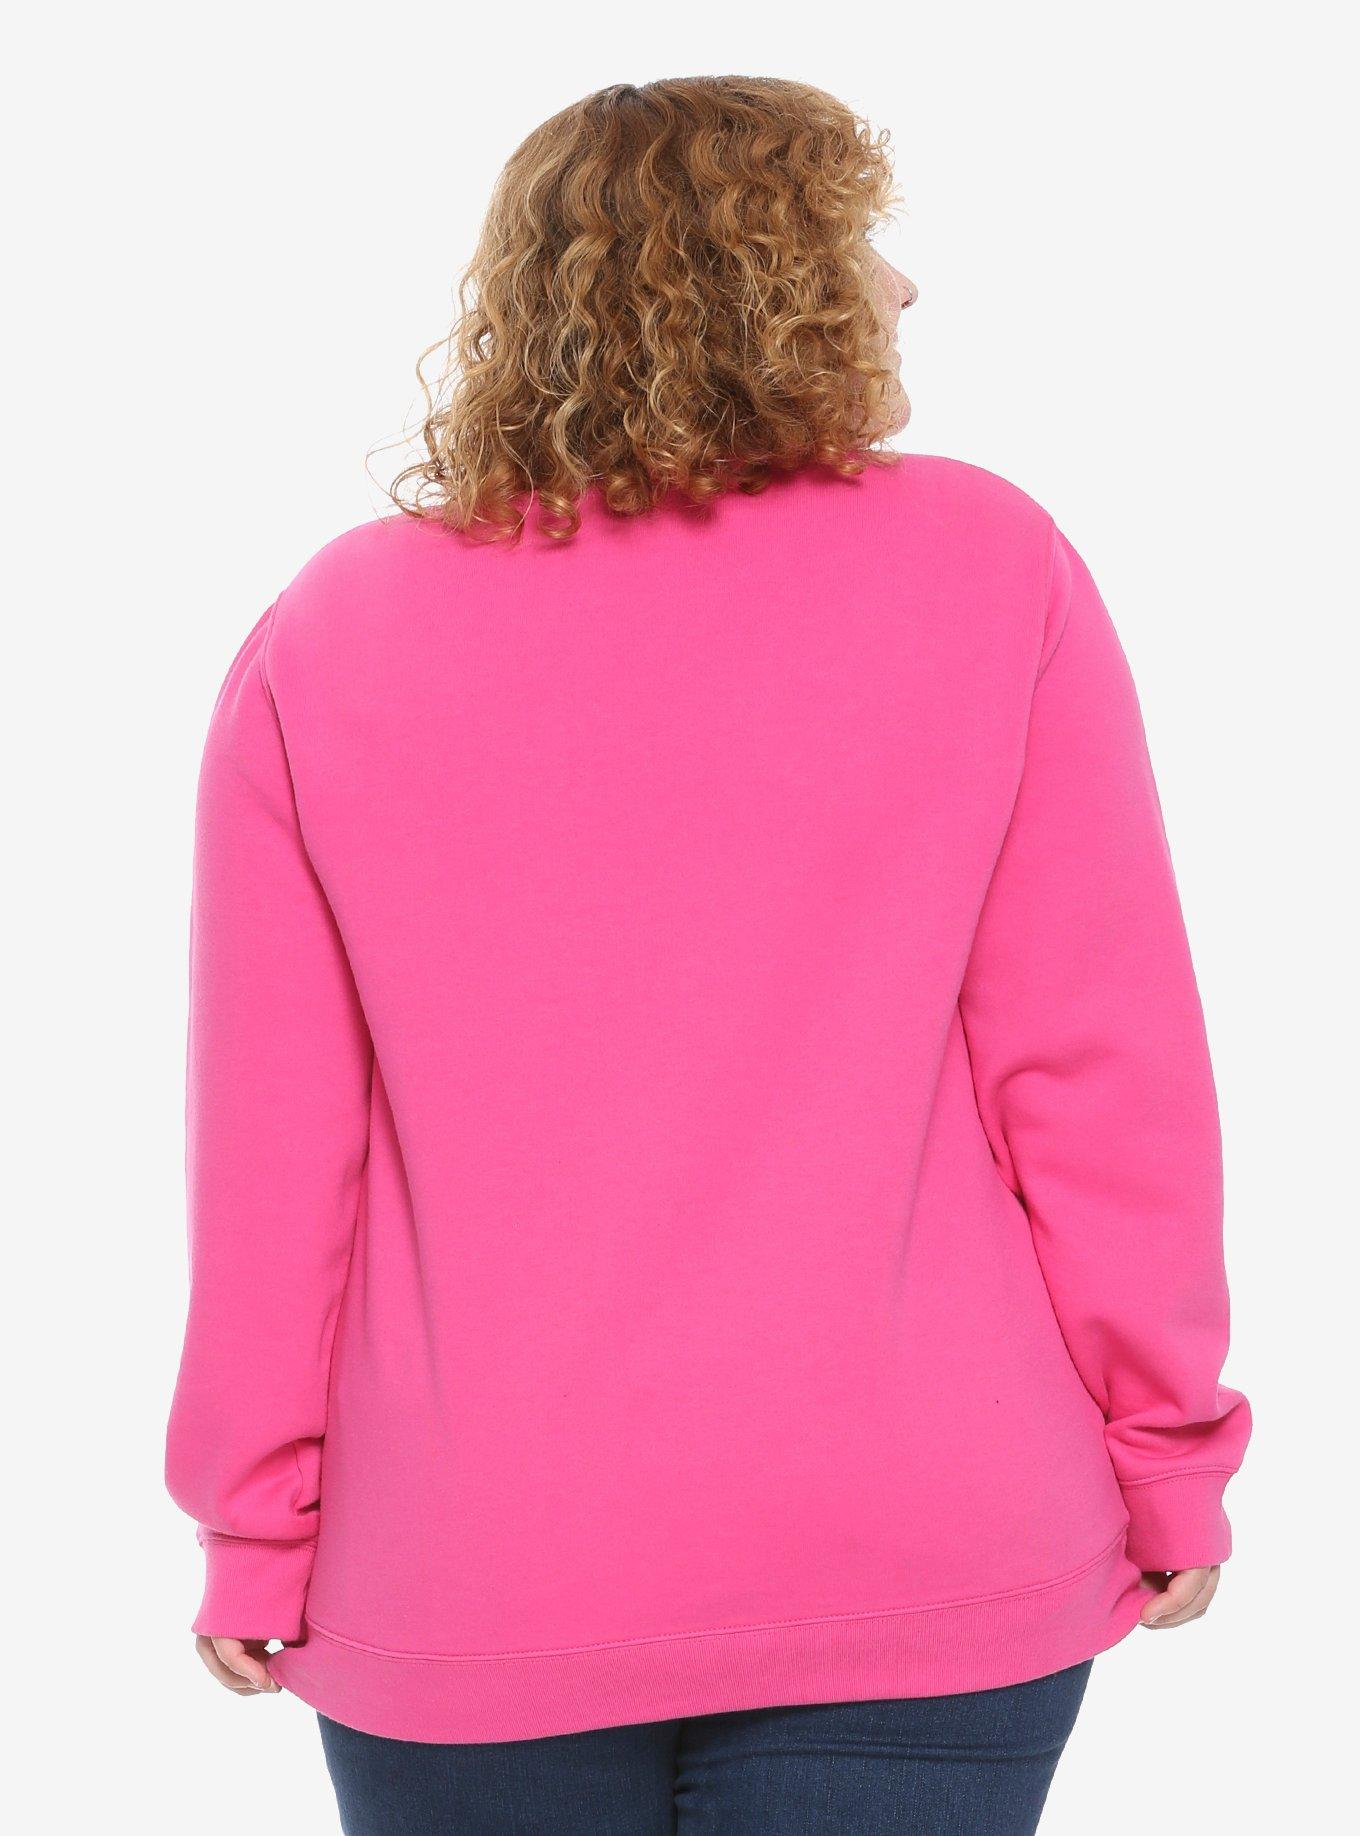 Gravity Falls Mabel Rainbow Star Sweatshirt Plus Size, PINK, alternate